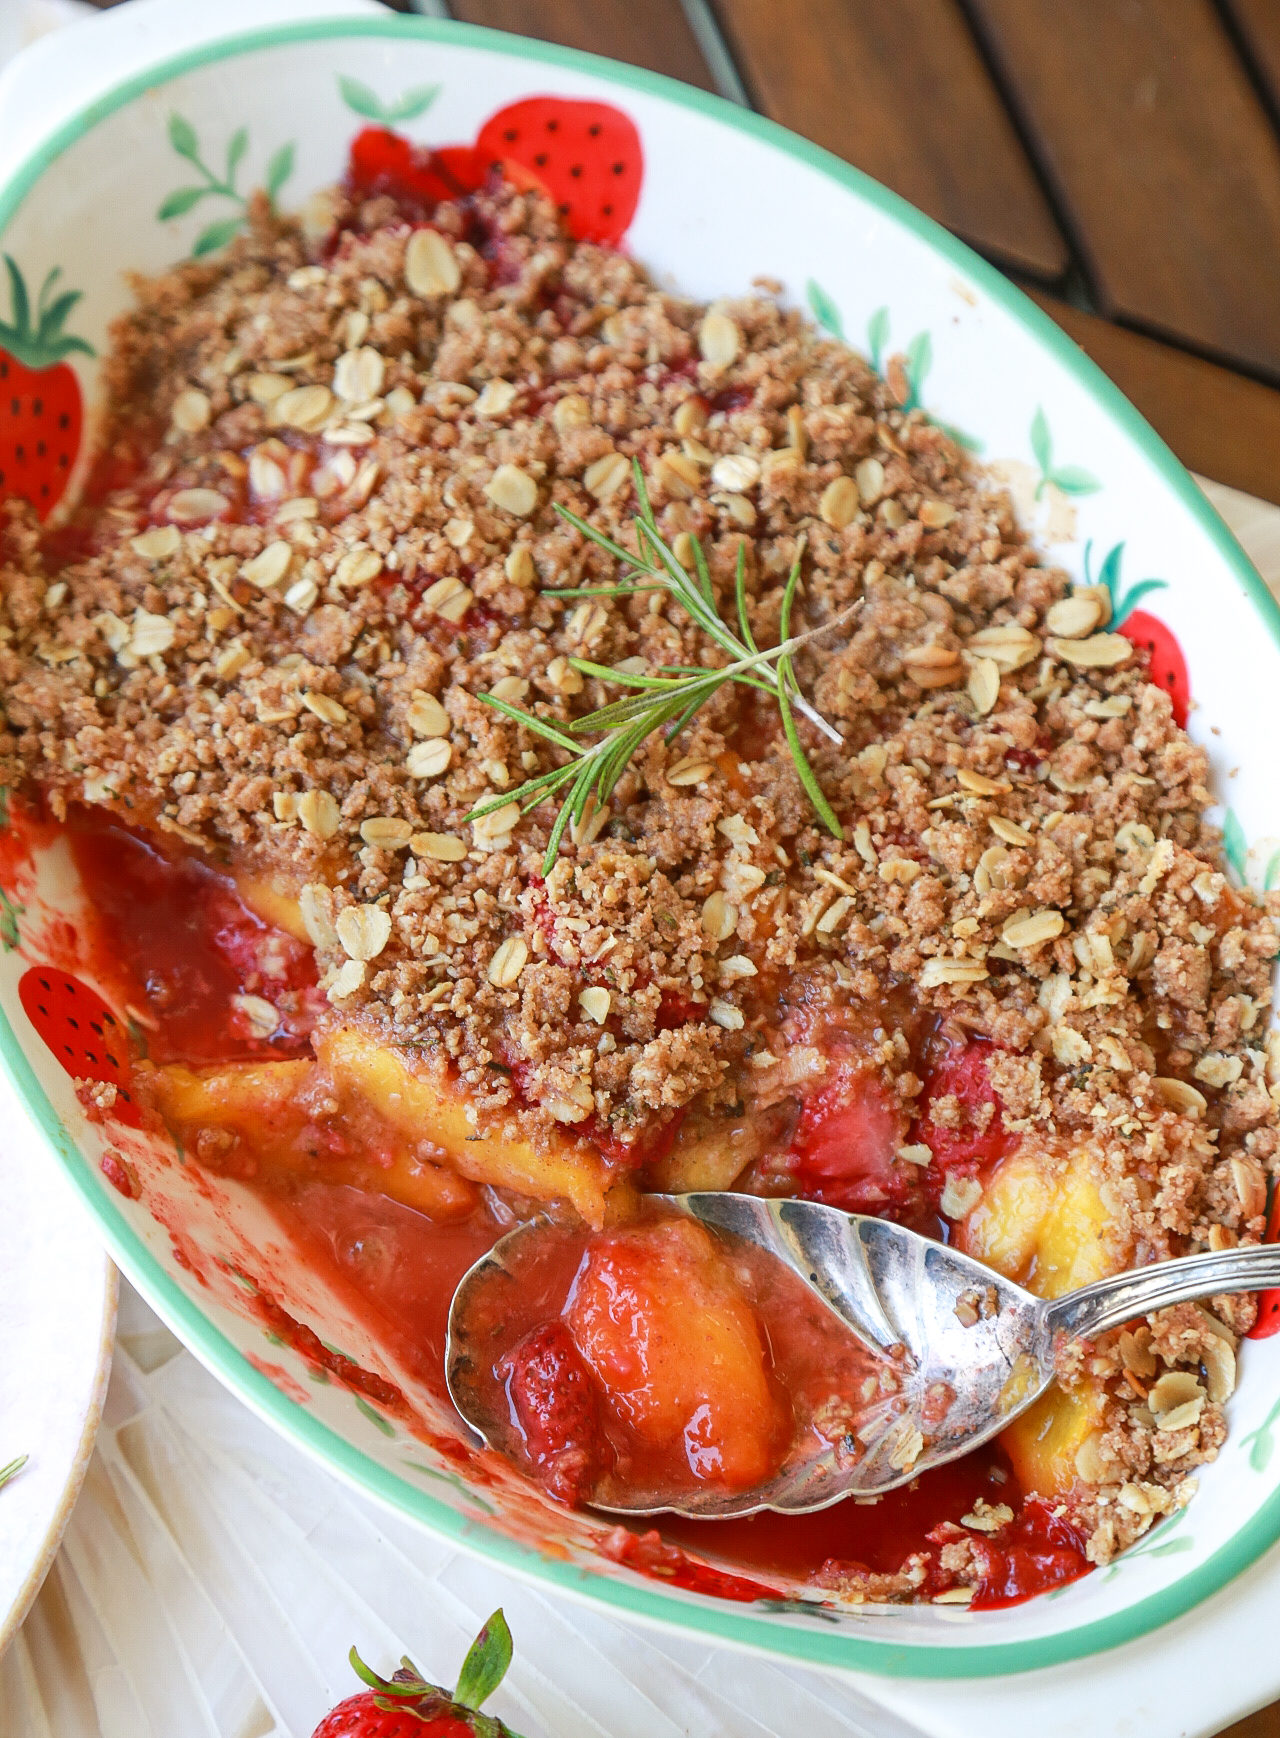 Peach and Strawberry Rosemary Crisp by Maren Swanson. #recipe #dessert #peaches #strawberry